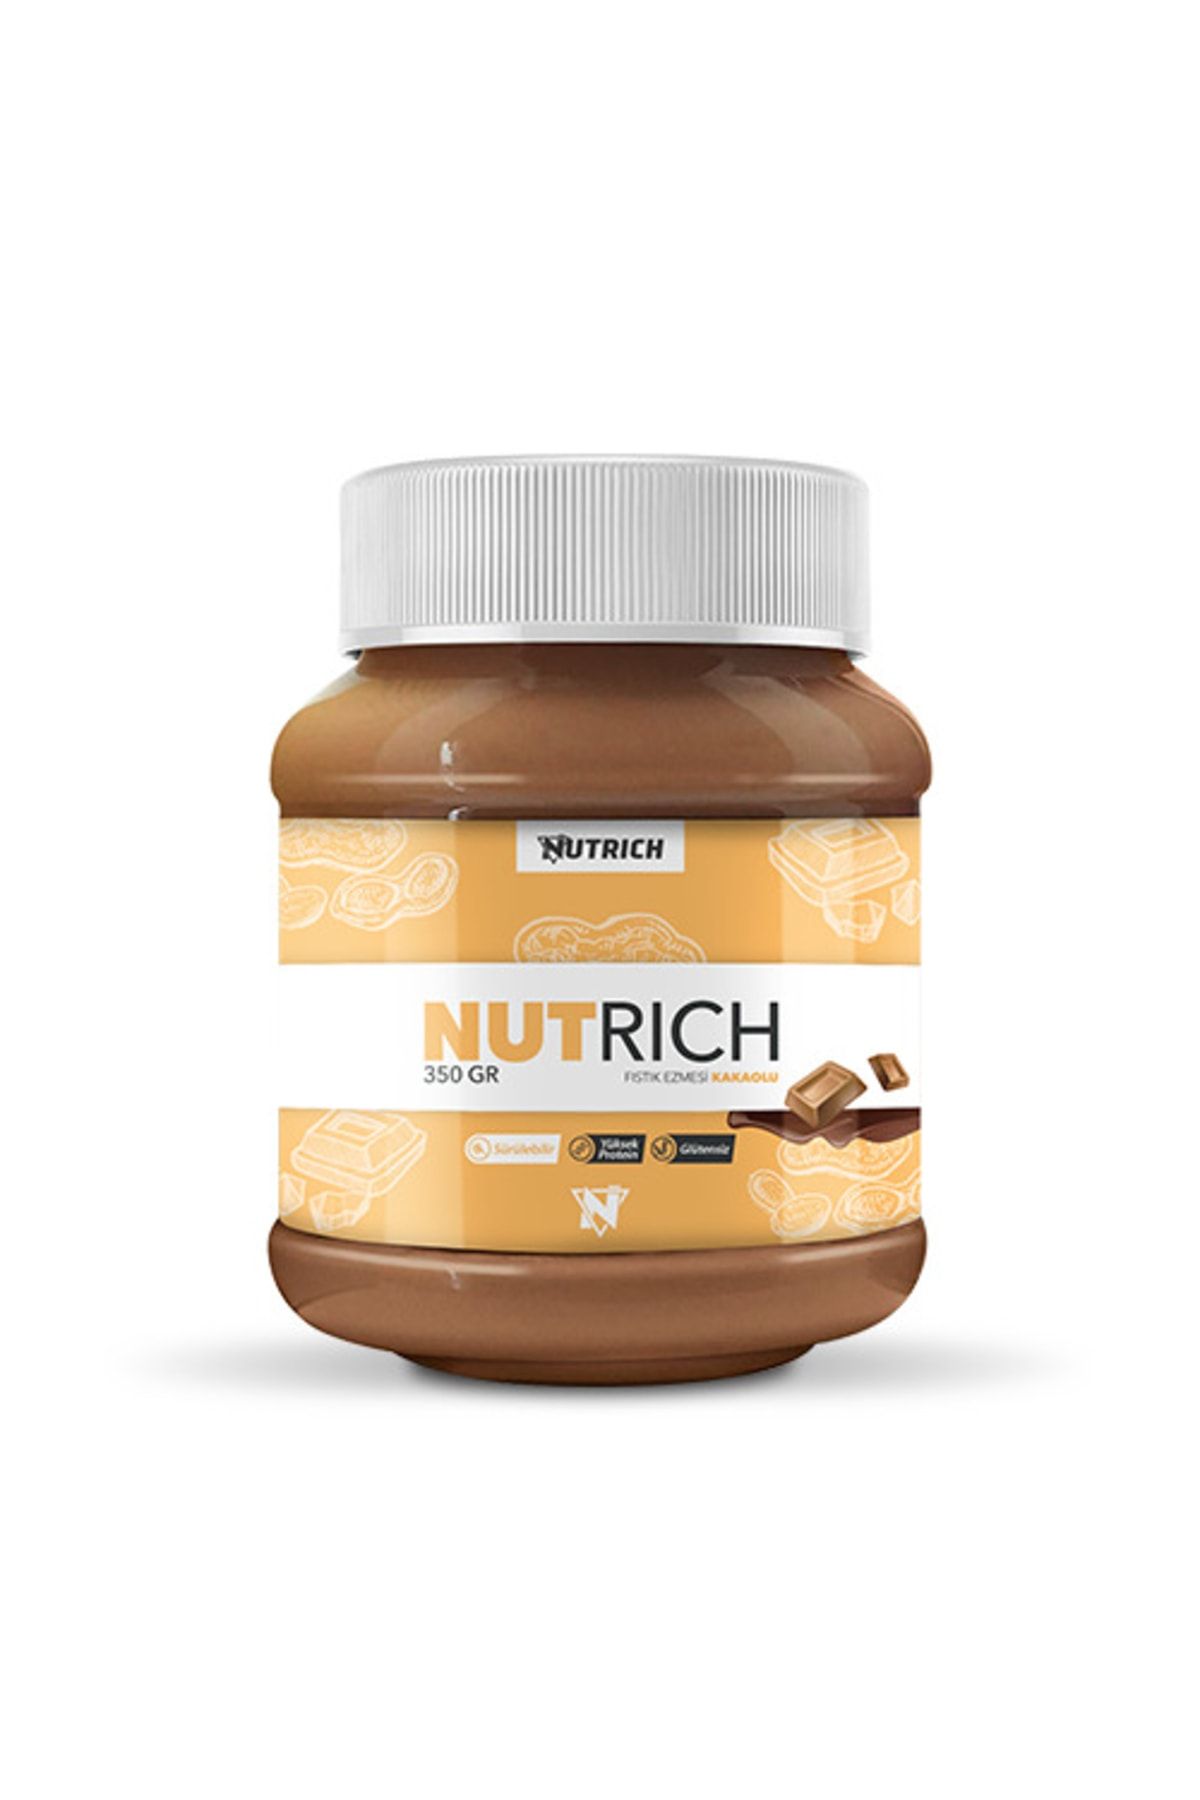 Nutrich Creamy Kakaolu Doğal Fıstık Ezmesi 350 gr Richnut350c, One Size